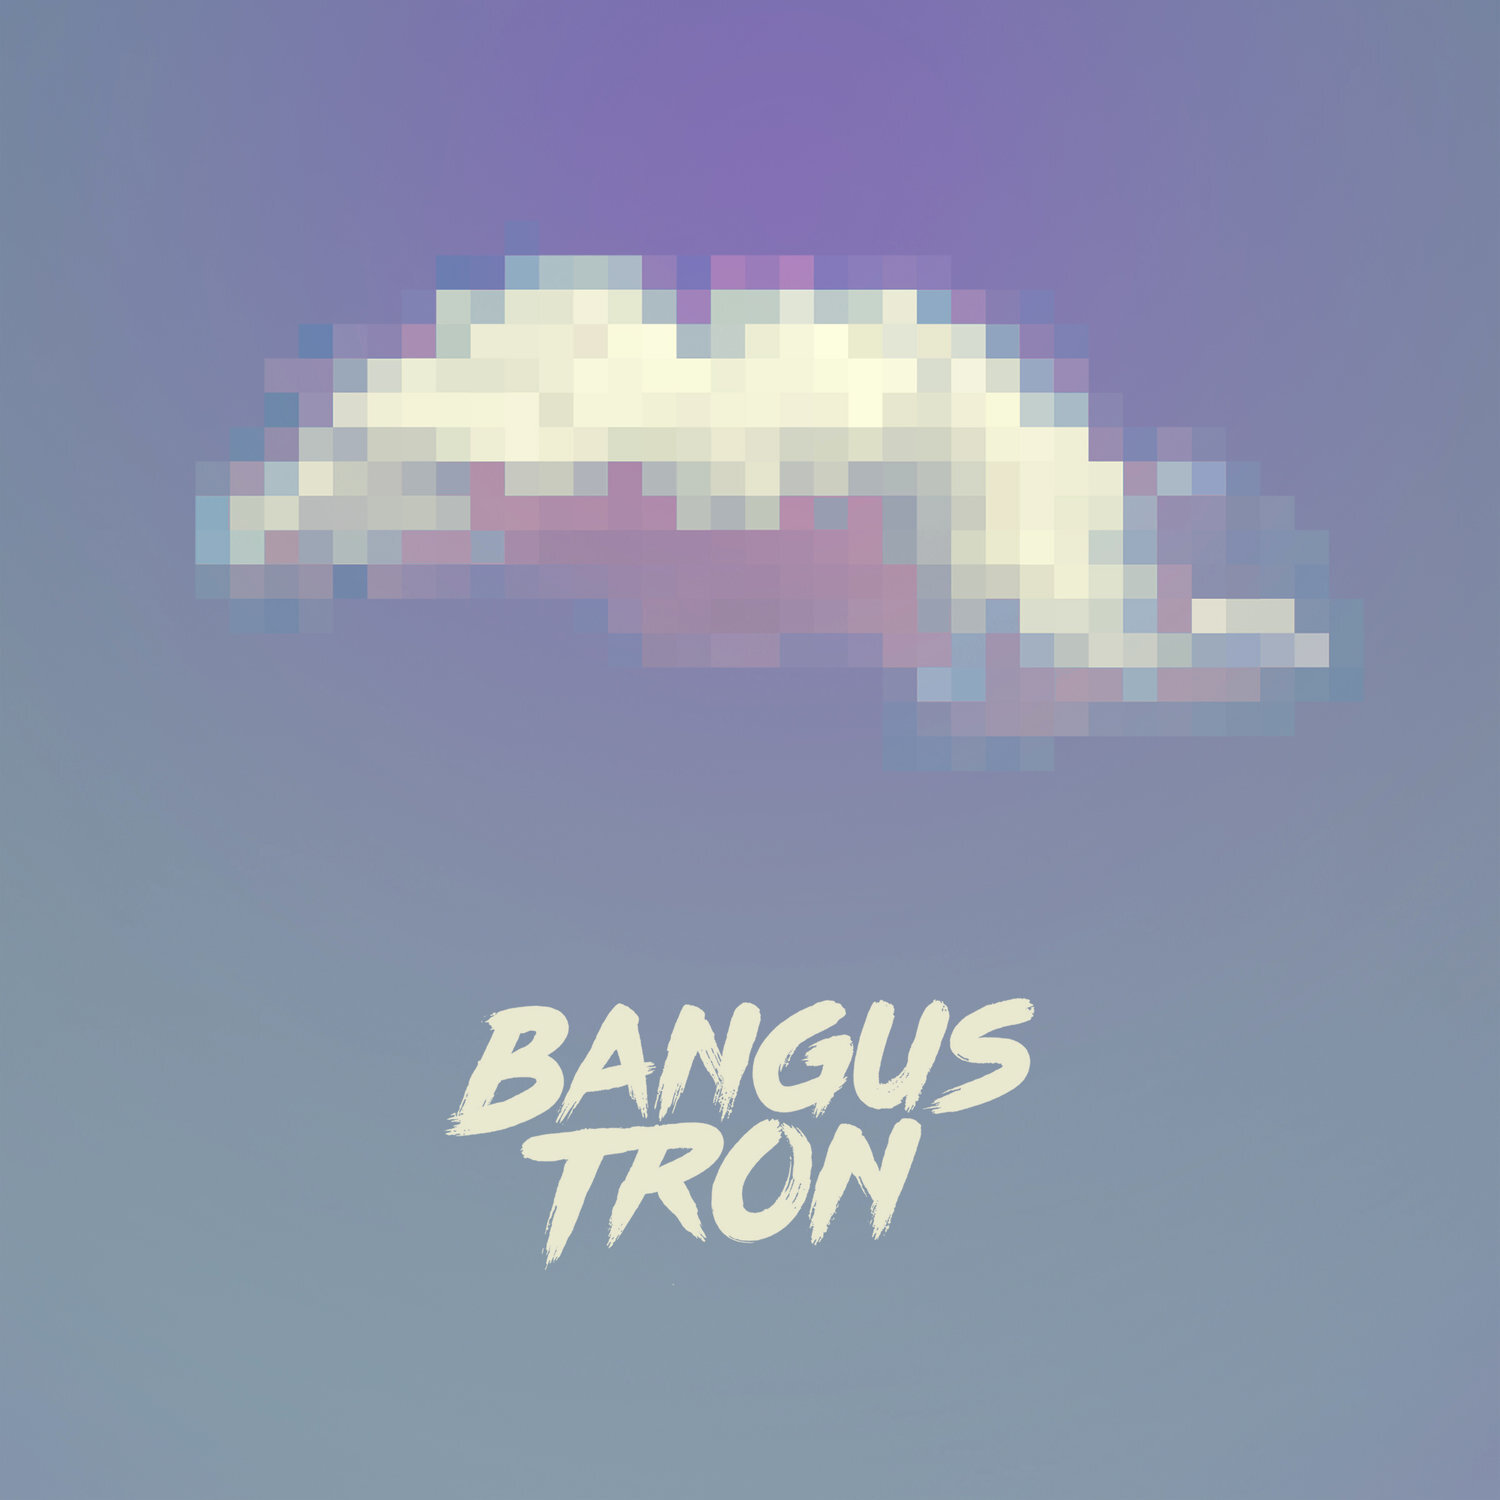 Bangus Tron, "Bamboo Daydreams" Remix/Alternate artwork